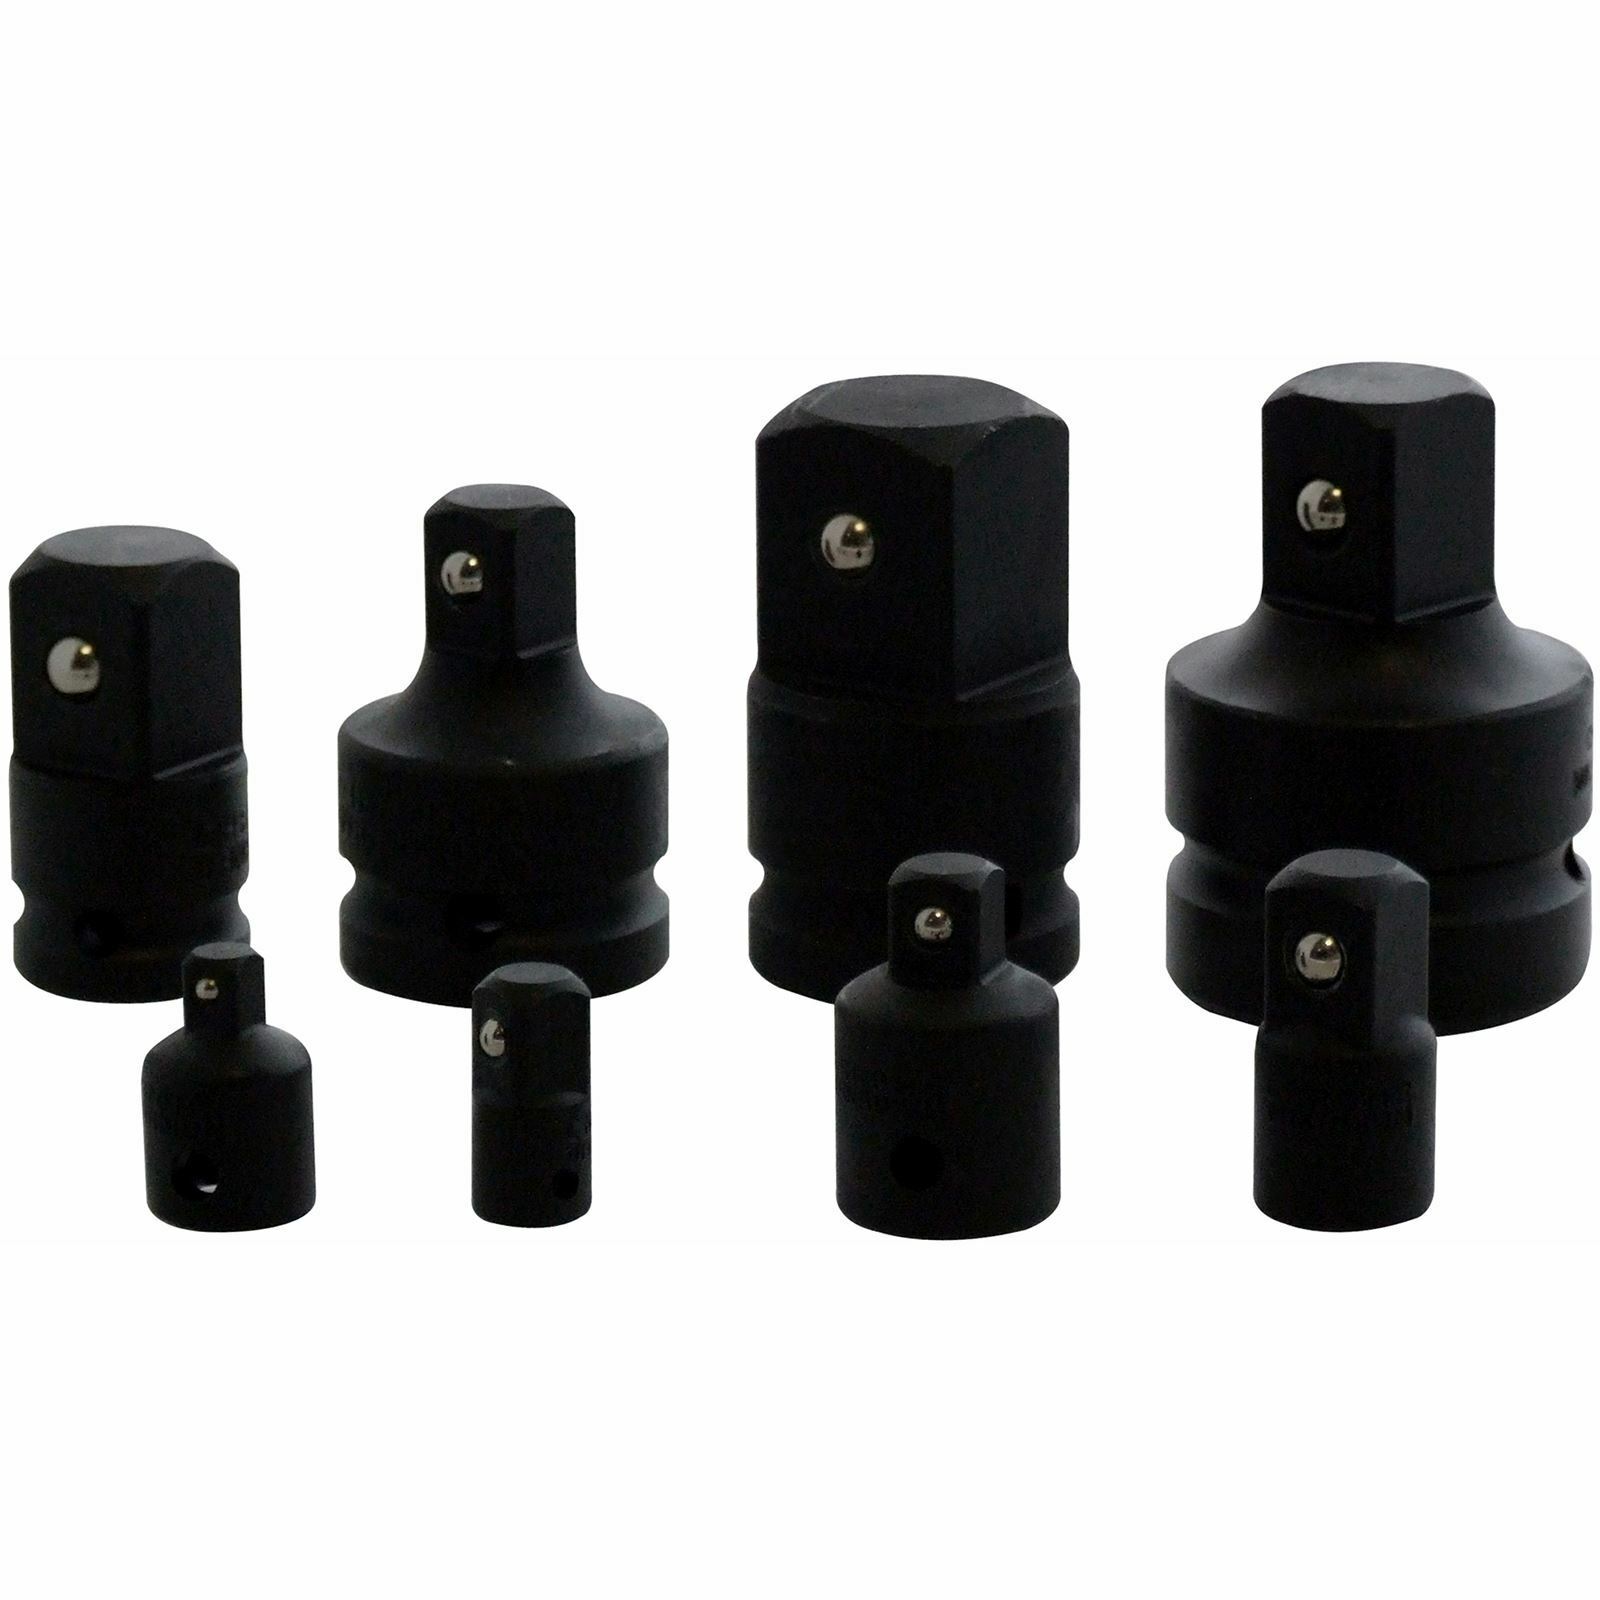 8pc Air Impact Socket Adapter Set Converter Reducer Black Garage Workshop